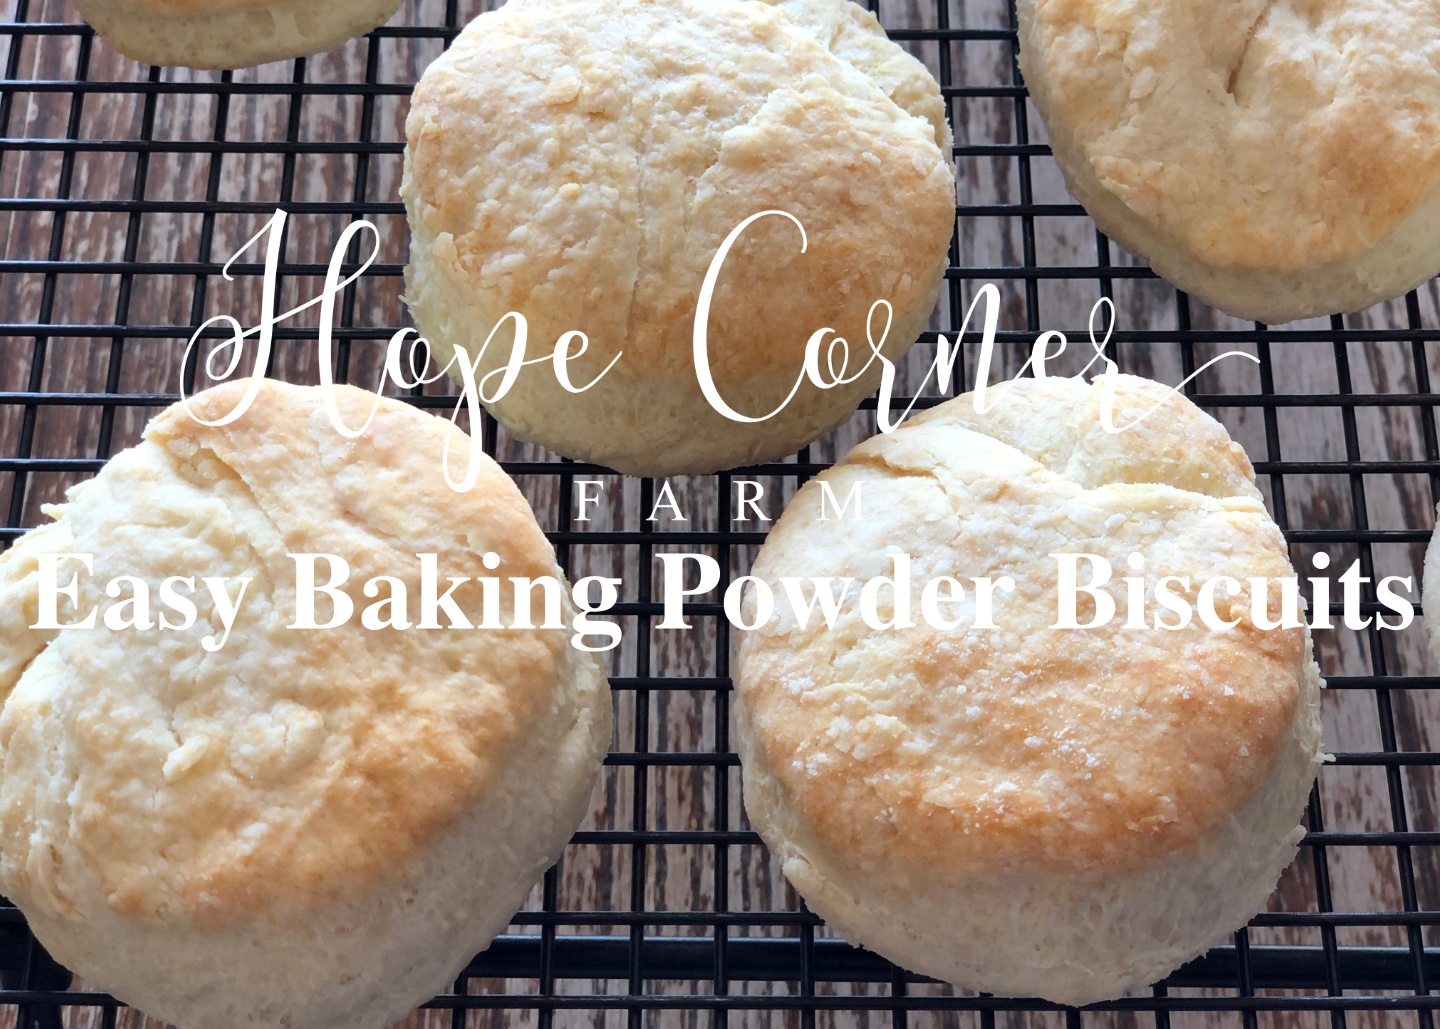 Easy Baking Powder Biscuit Recipe